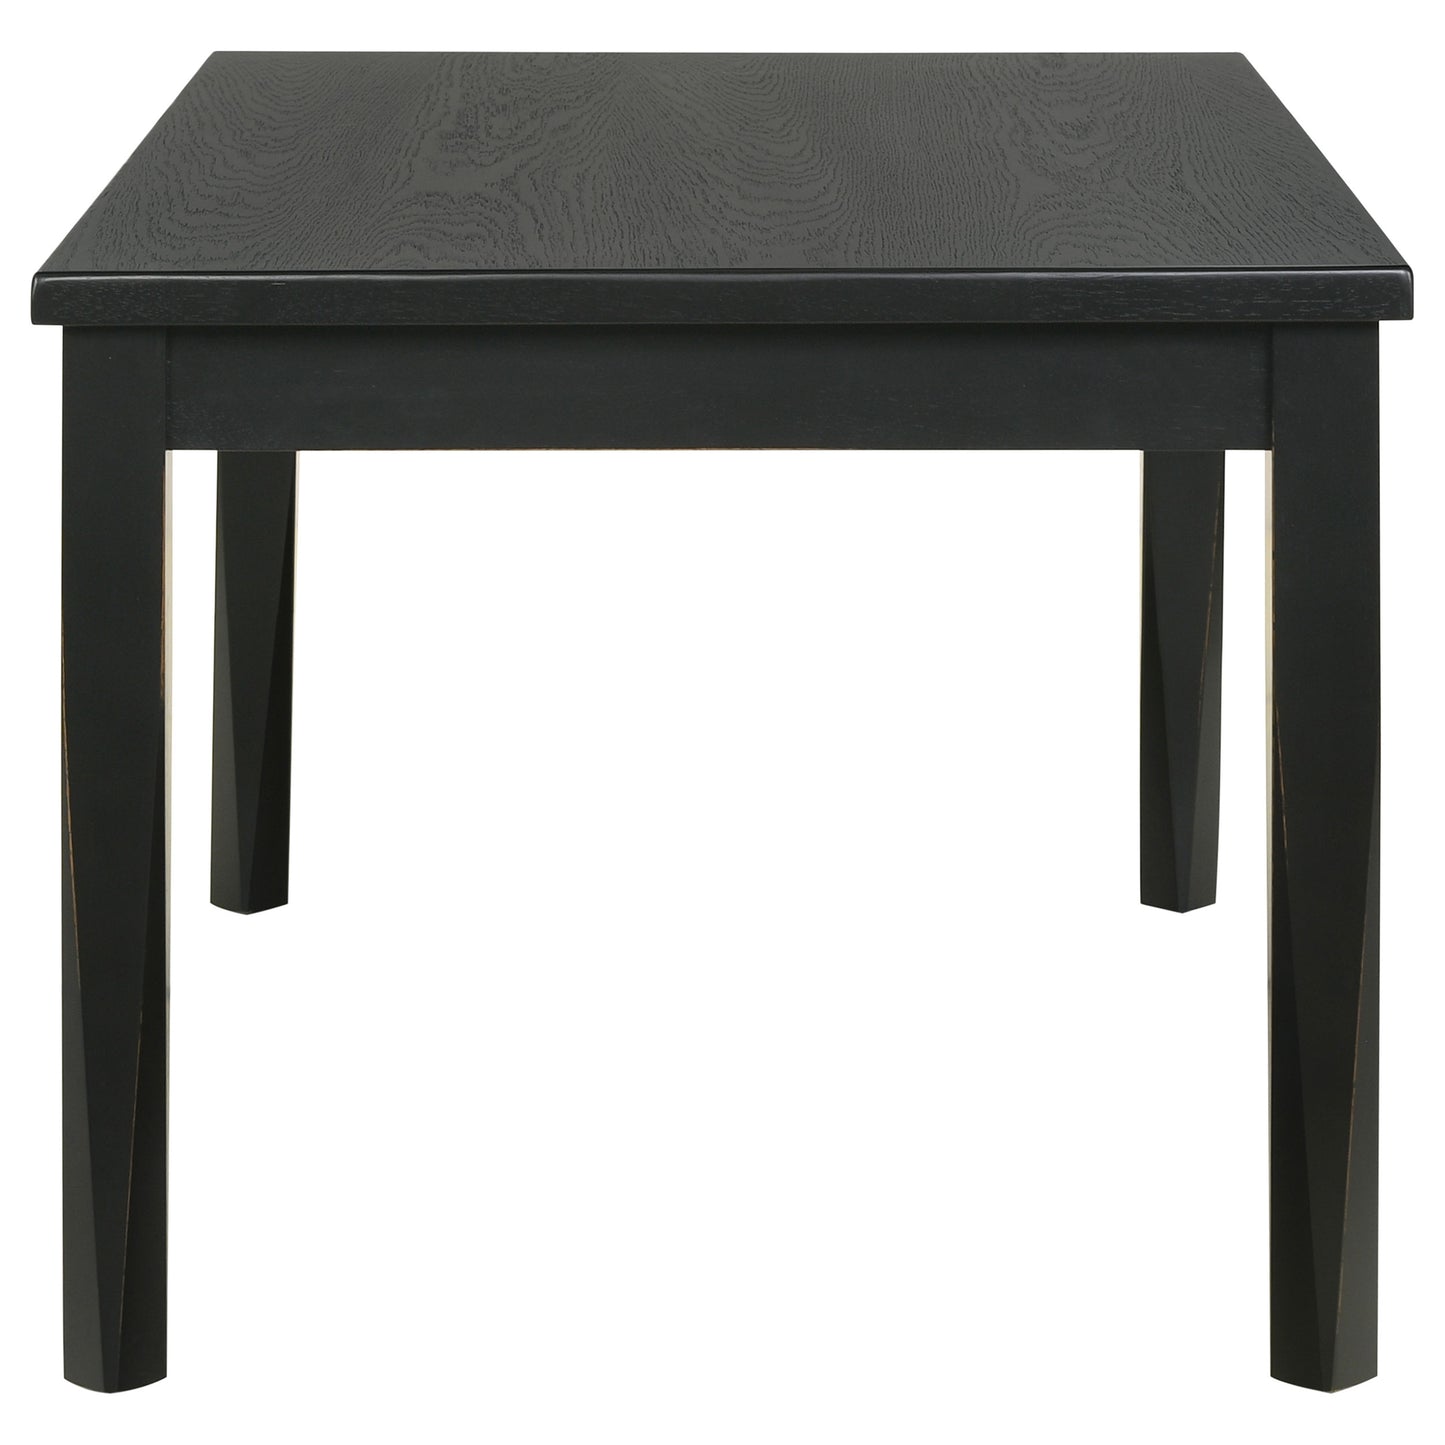 Appleton 5-piece Rectangular Wood Dining Table Set Black Washed and Light Grey